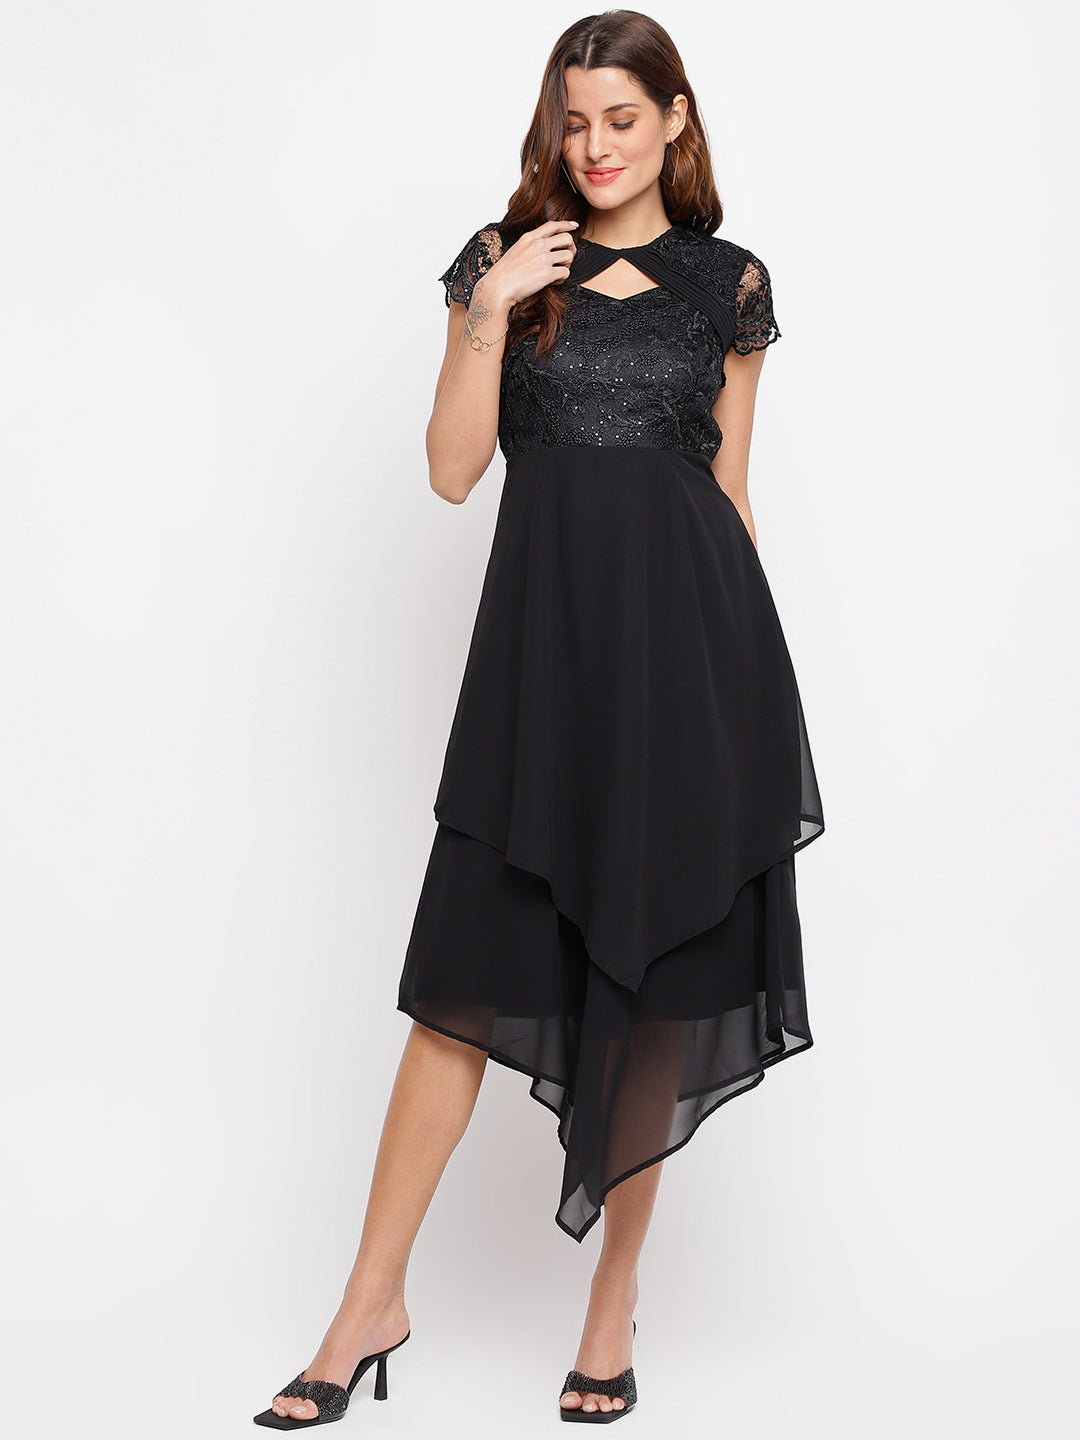 Black Cap Sleeve 2 Fir 1 Dress With Lace